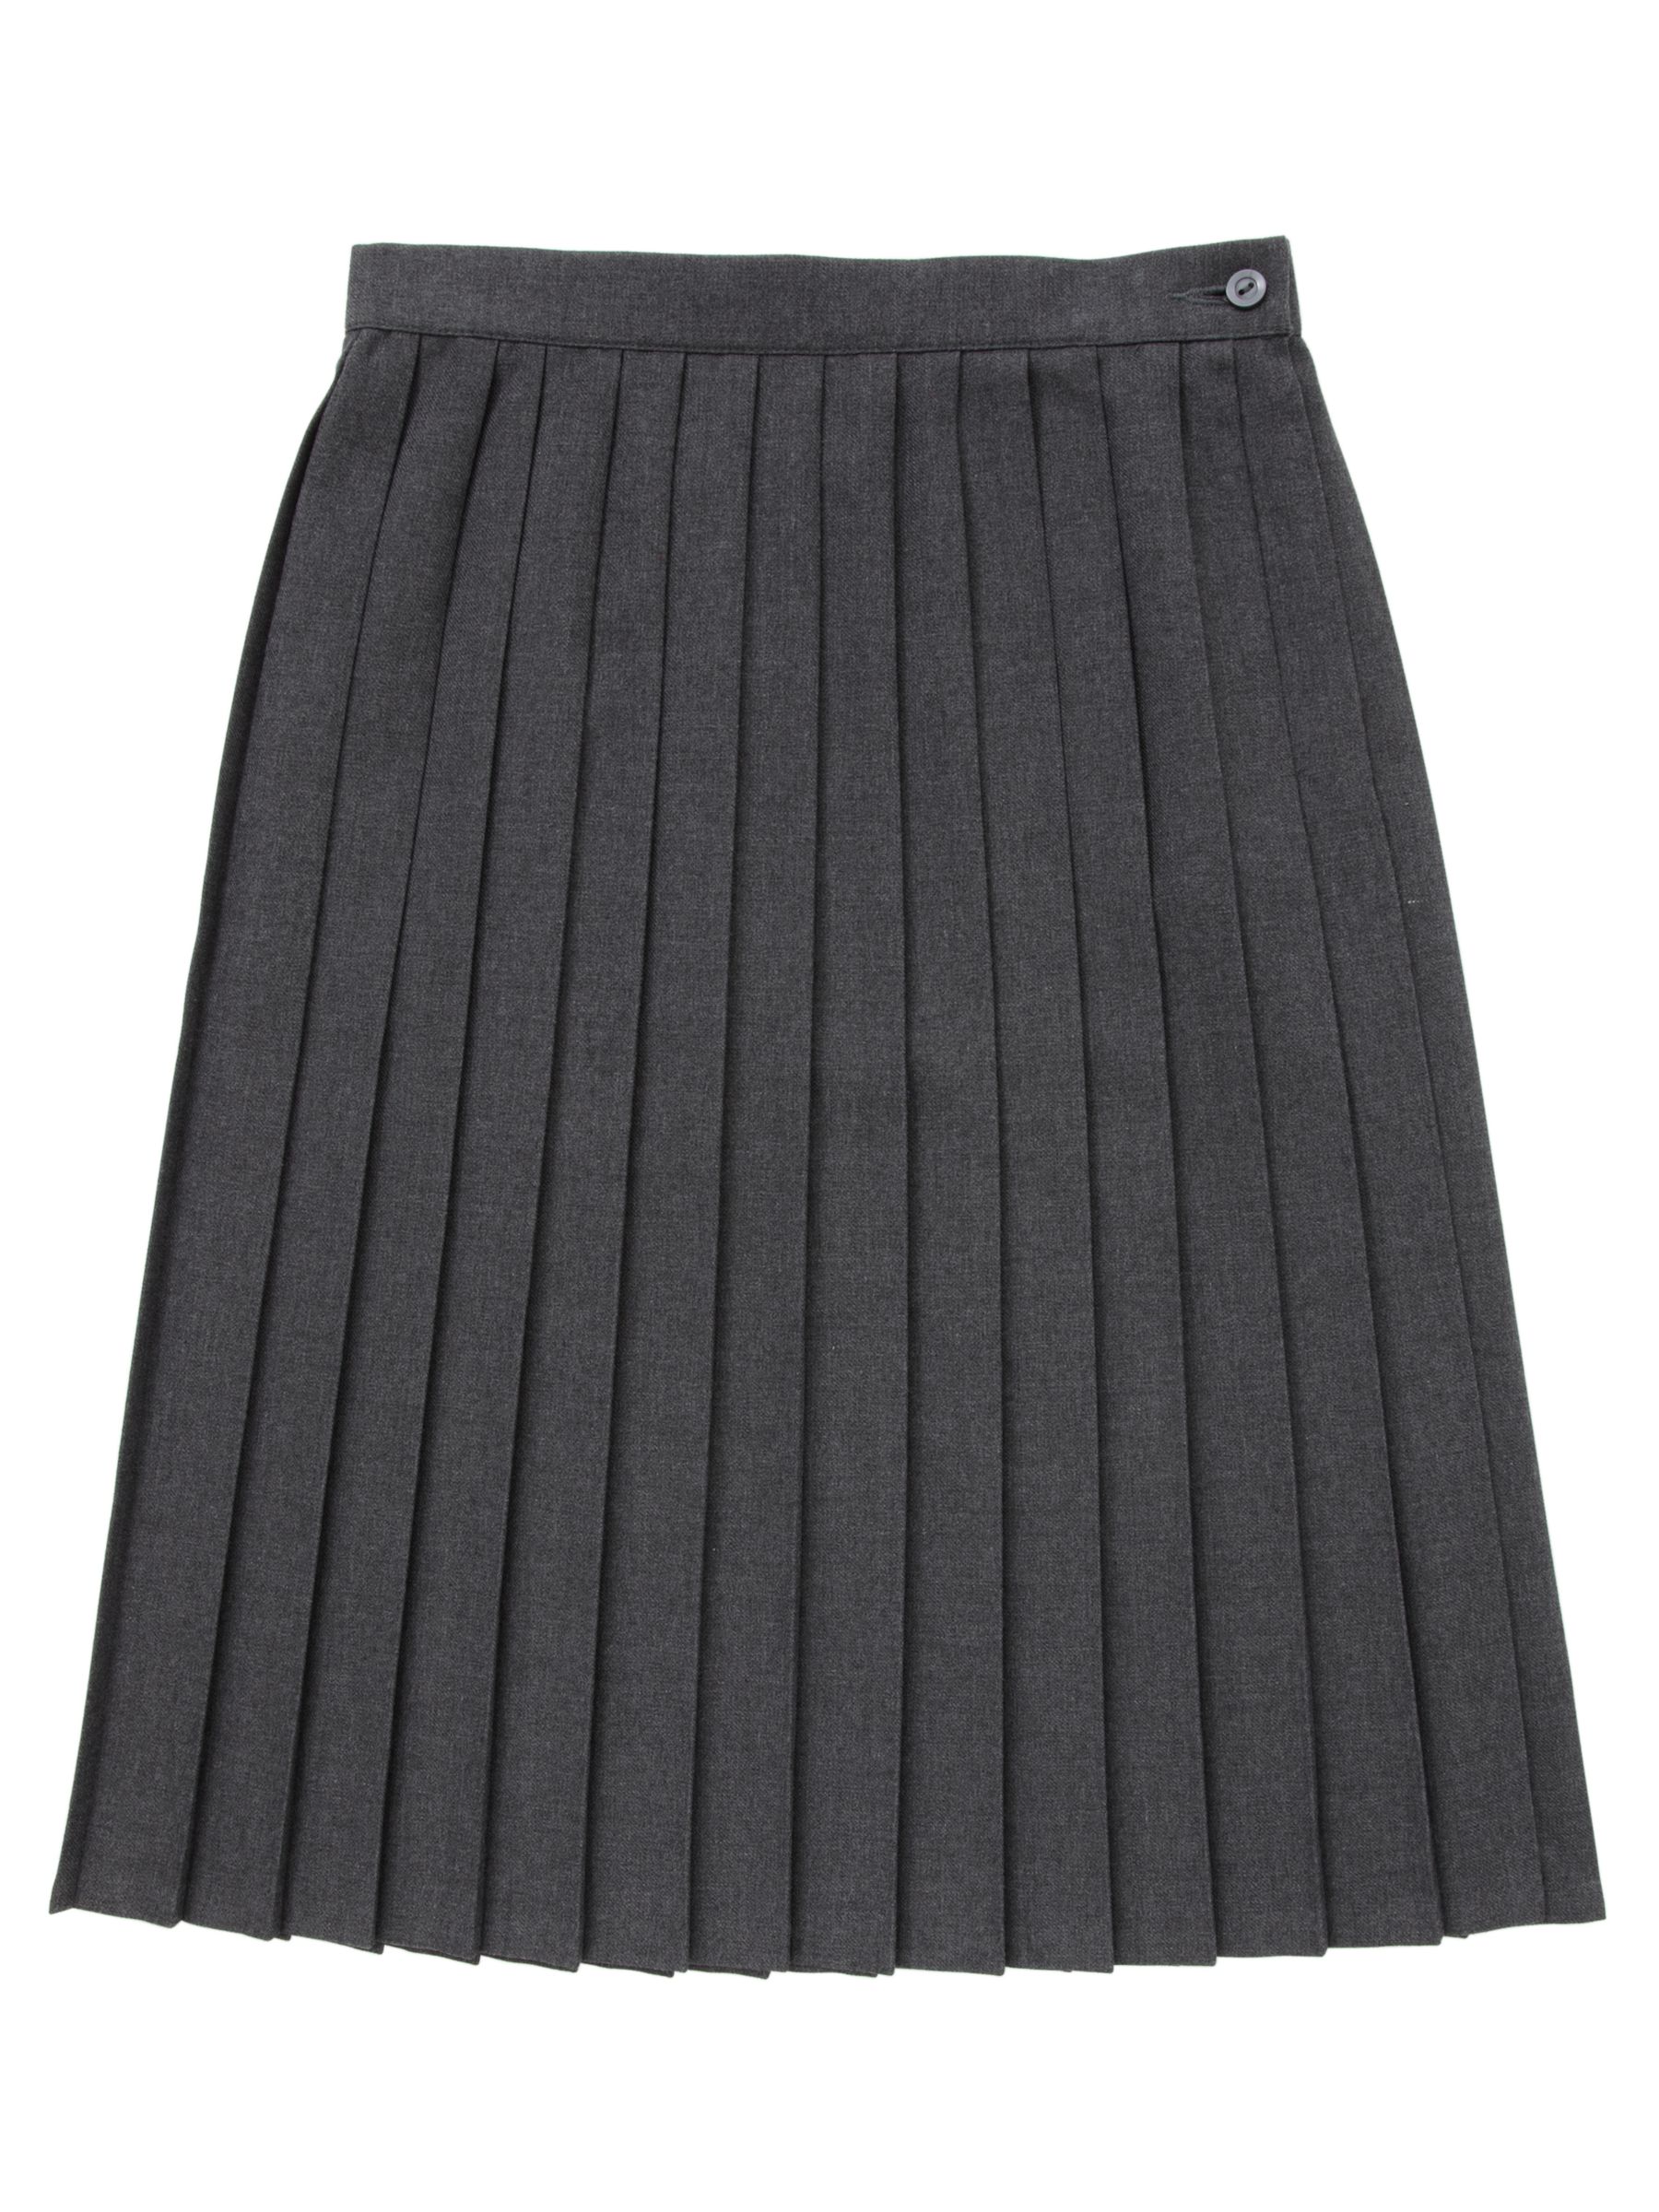 Buy Francis Holland School Girls' Pleat Skirt | John Lewis